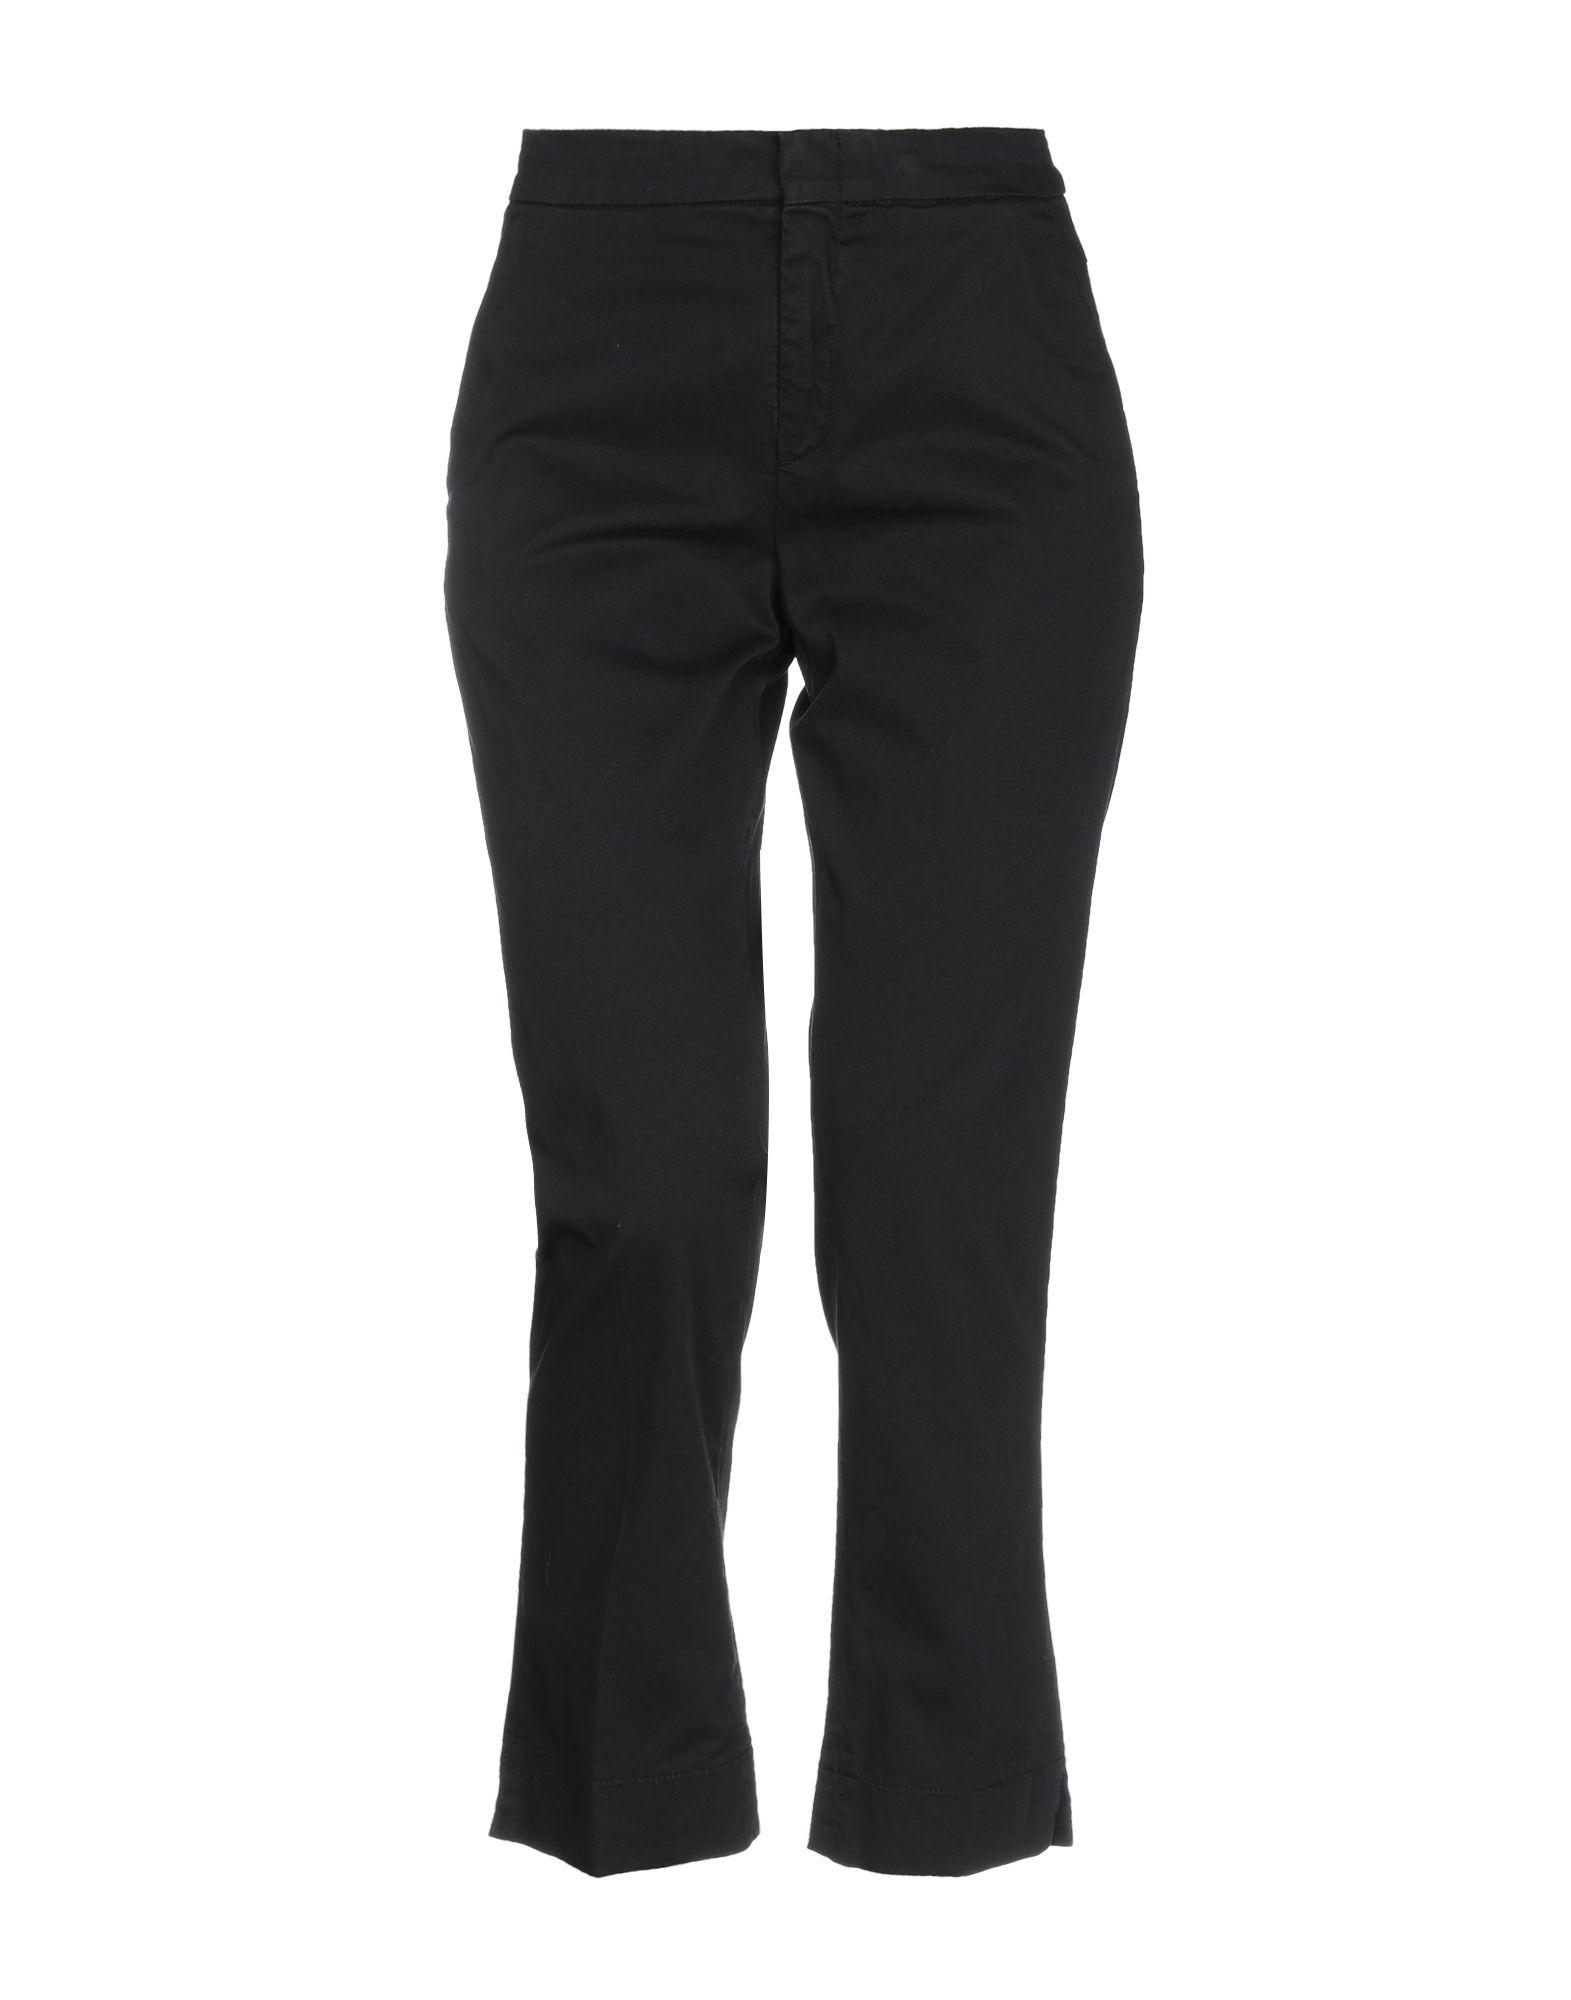 Aspesi Cotton Casual Trouser in Black - Lyst